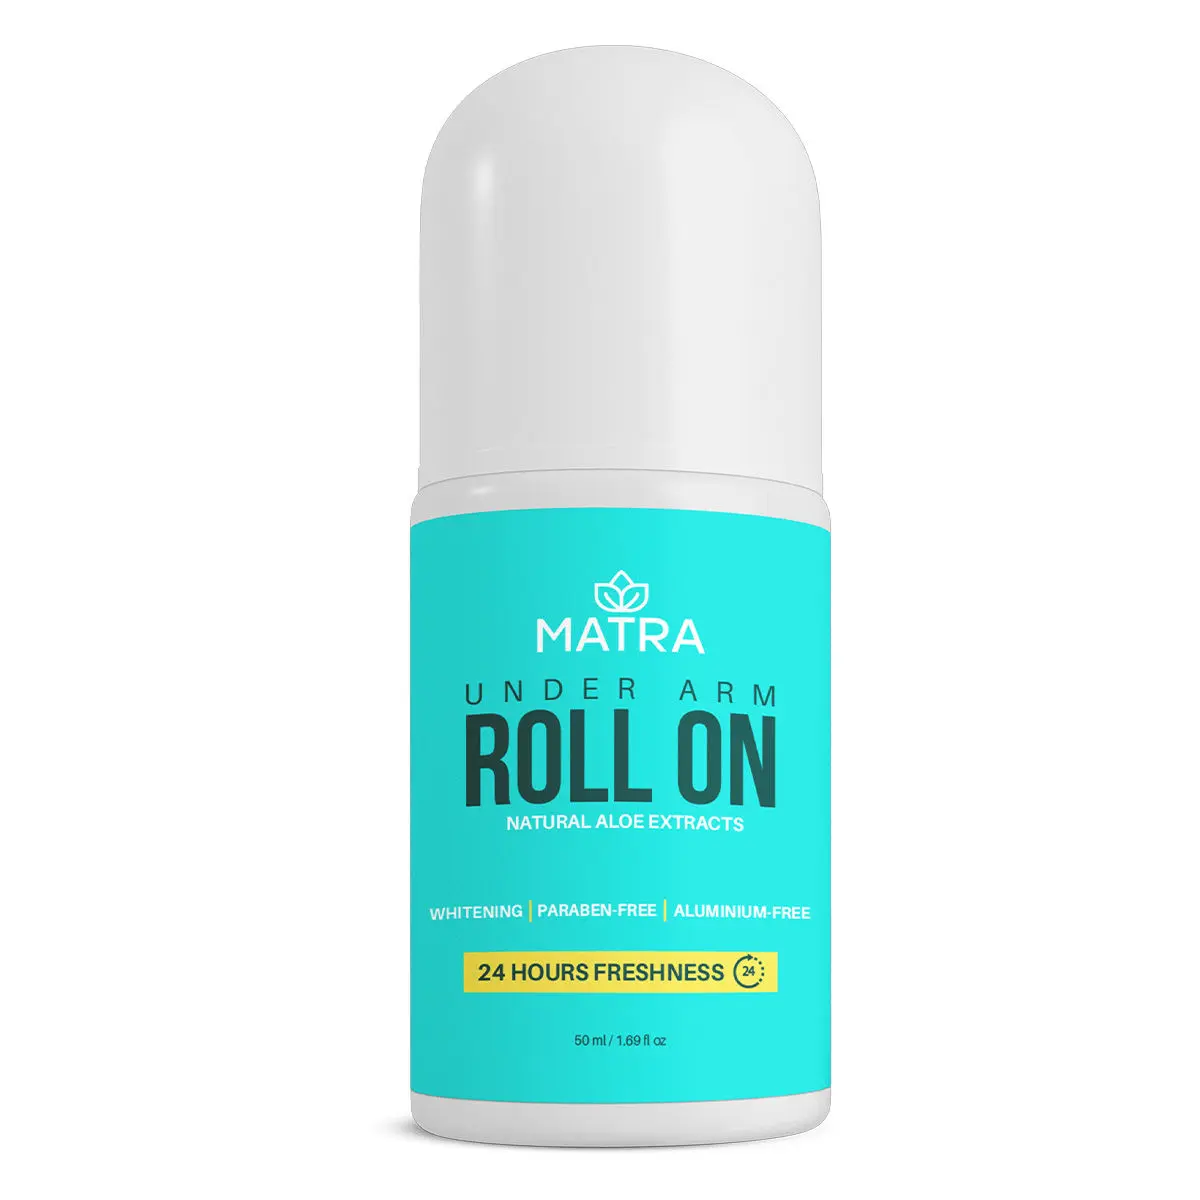 MATRA Matra Underarm Deodorant Roll On - Whitening Roll On for Odour Control & 24 Hours Freshness - Antibacterial & Aluminium-free Antiperspirant Underarm Roll On - Unisex Anti-sweat Body Roll-on Deo Stick